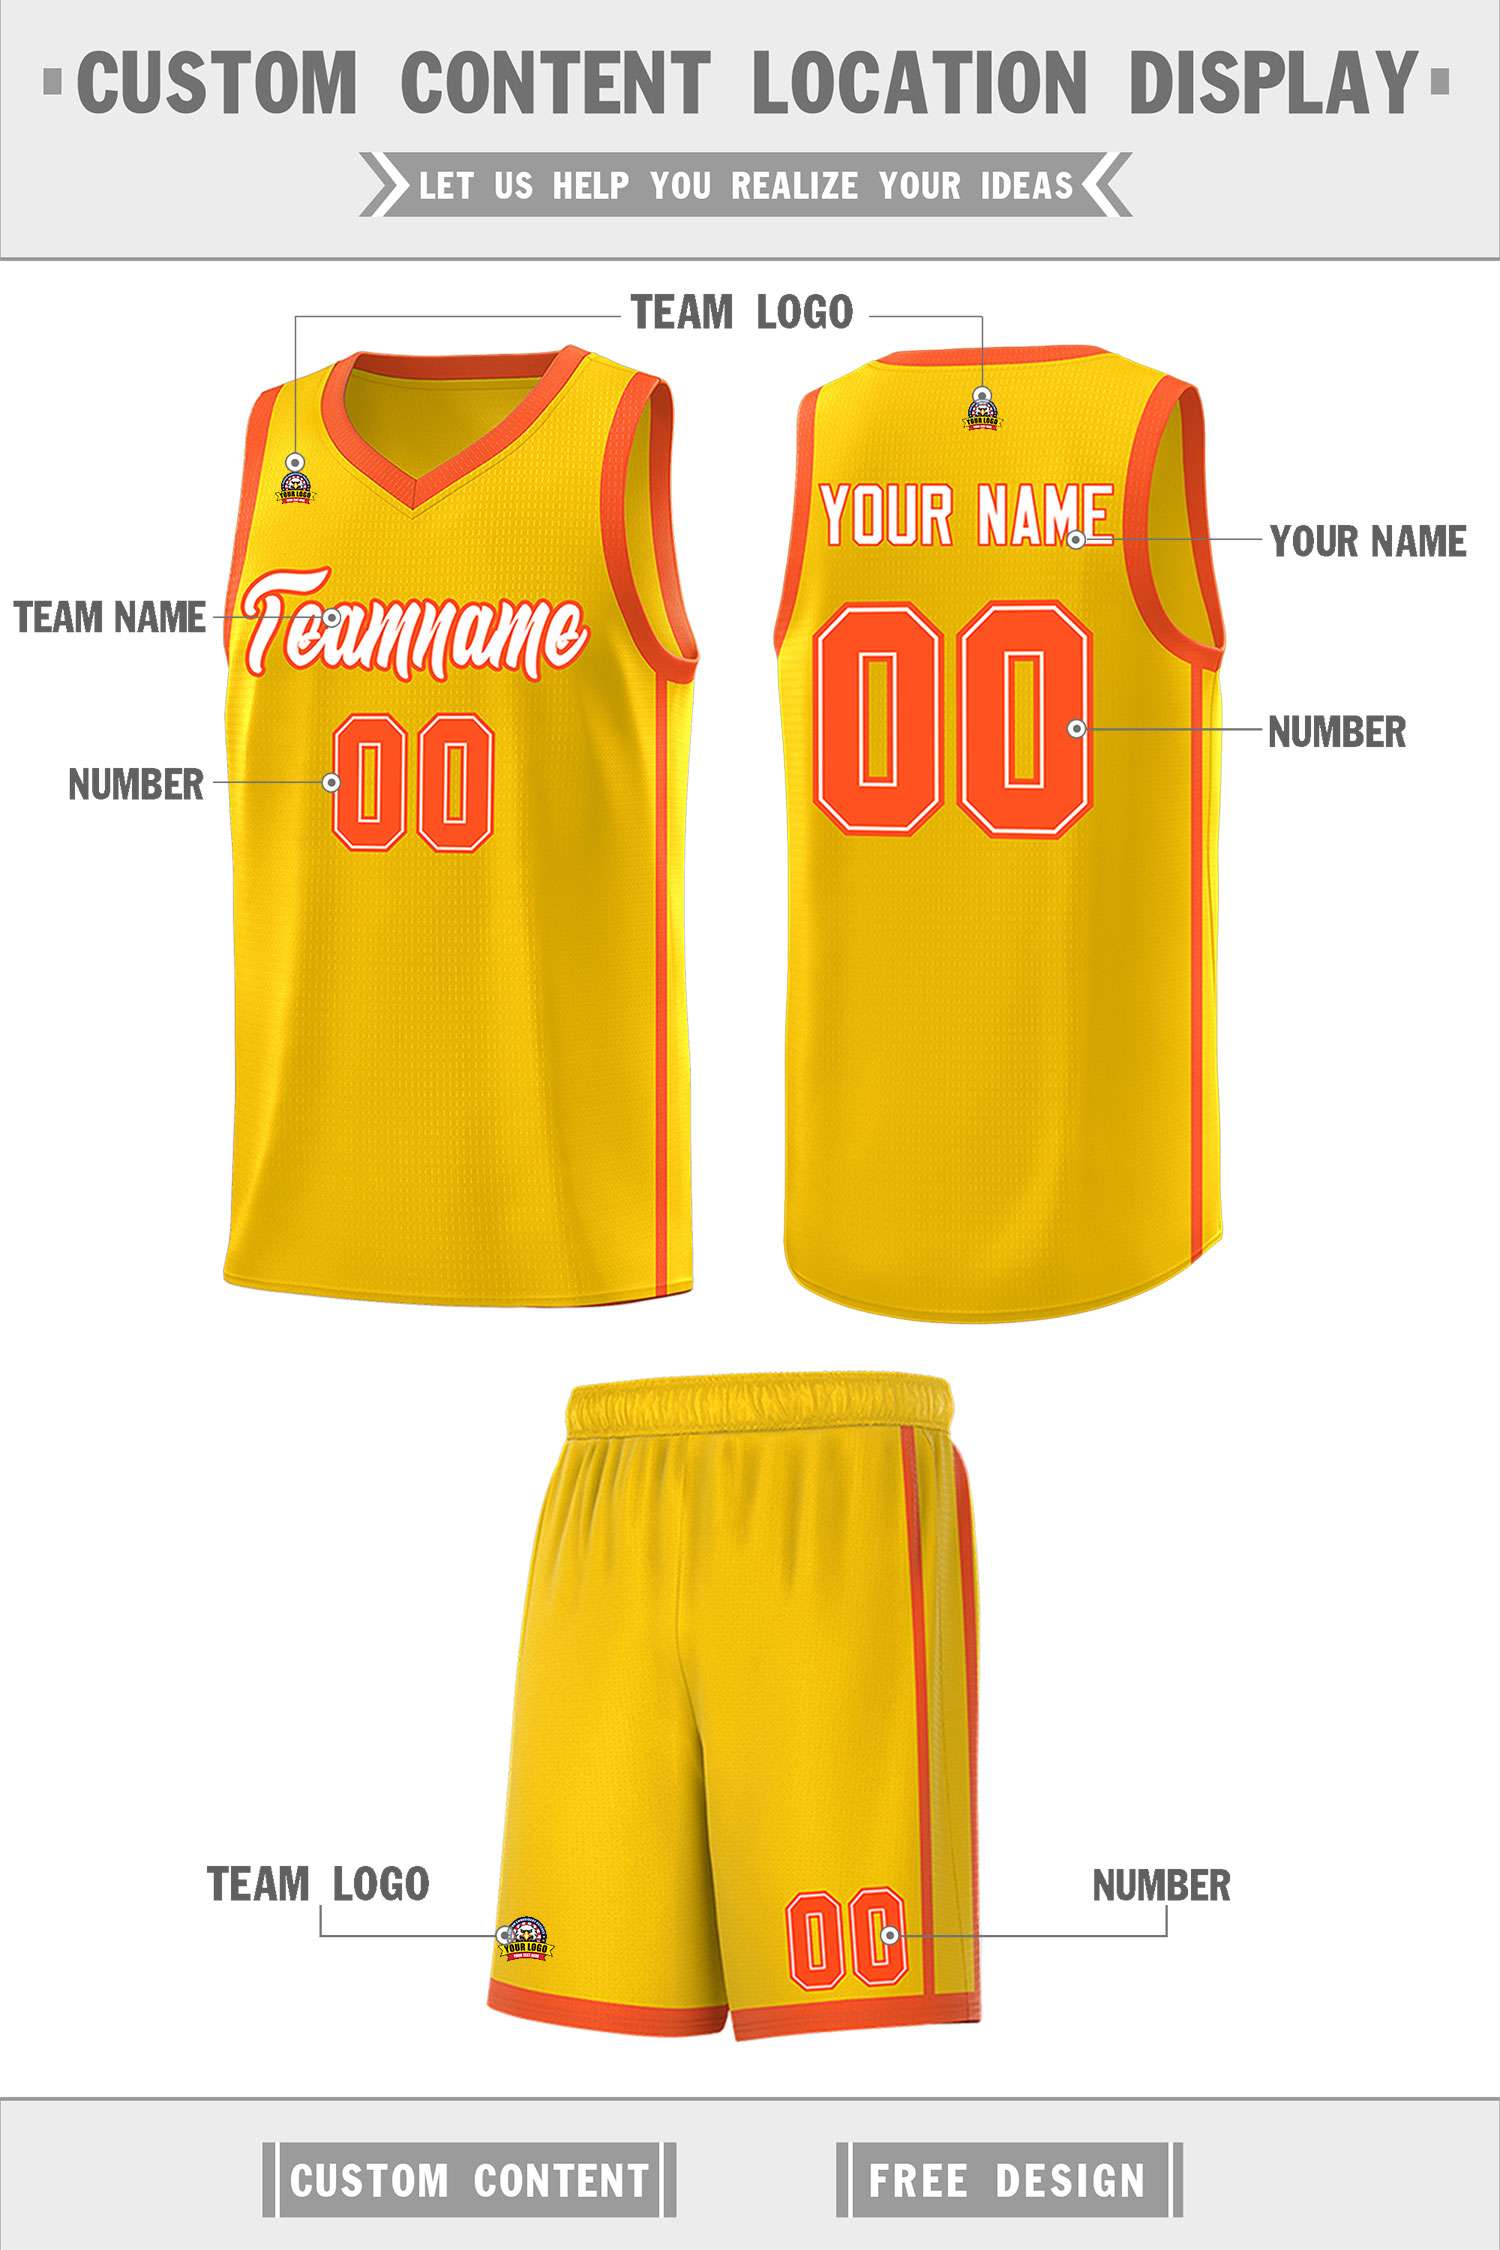 Custom Gold White-Orange Side Two Bars Sports Uniform Basketball Jersey